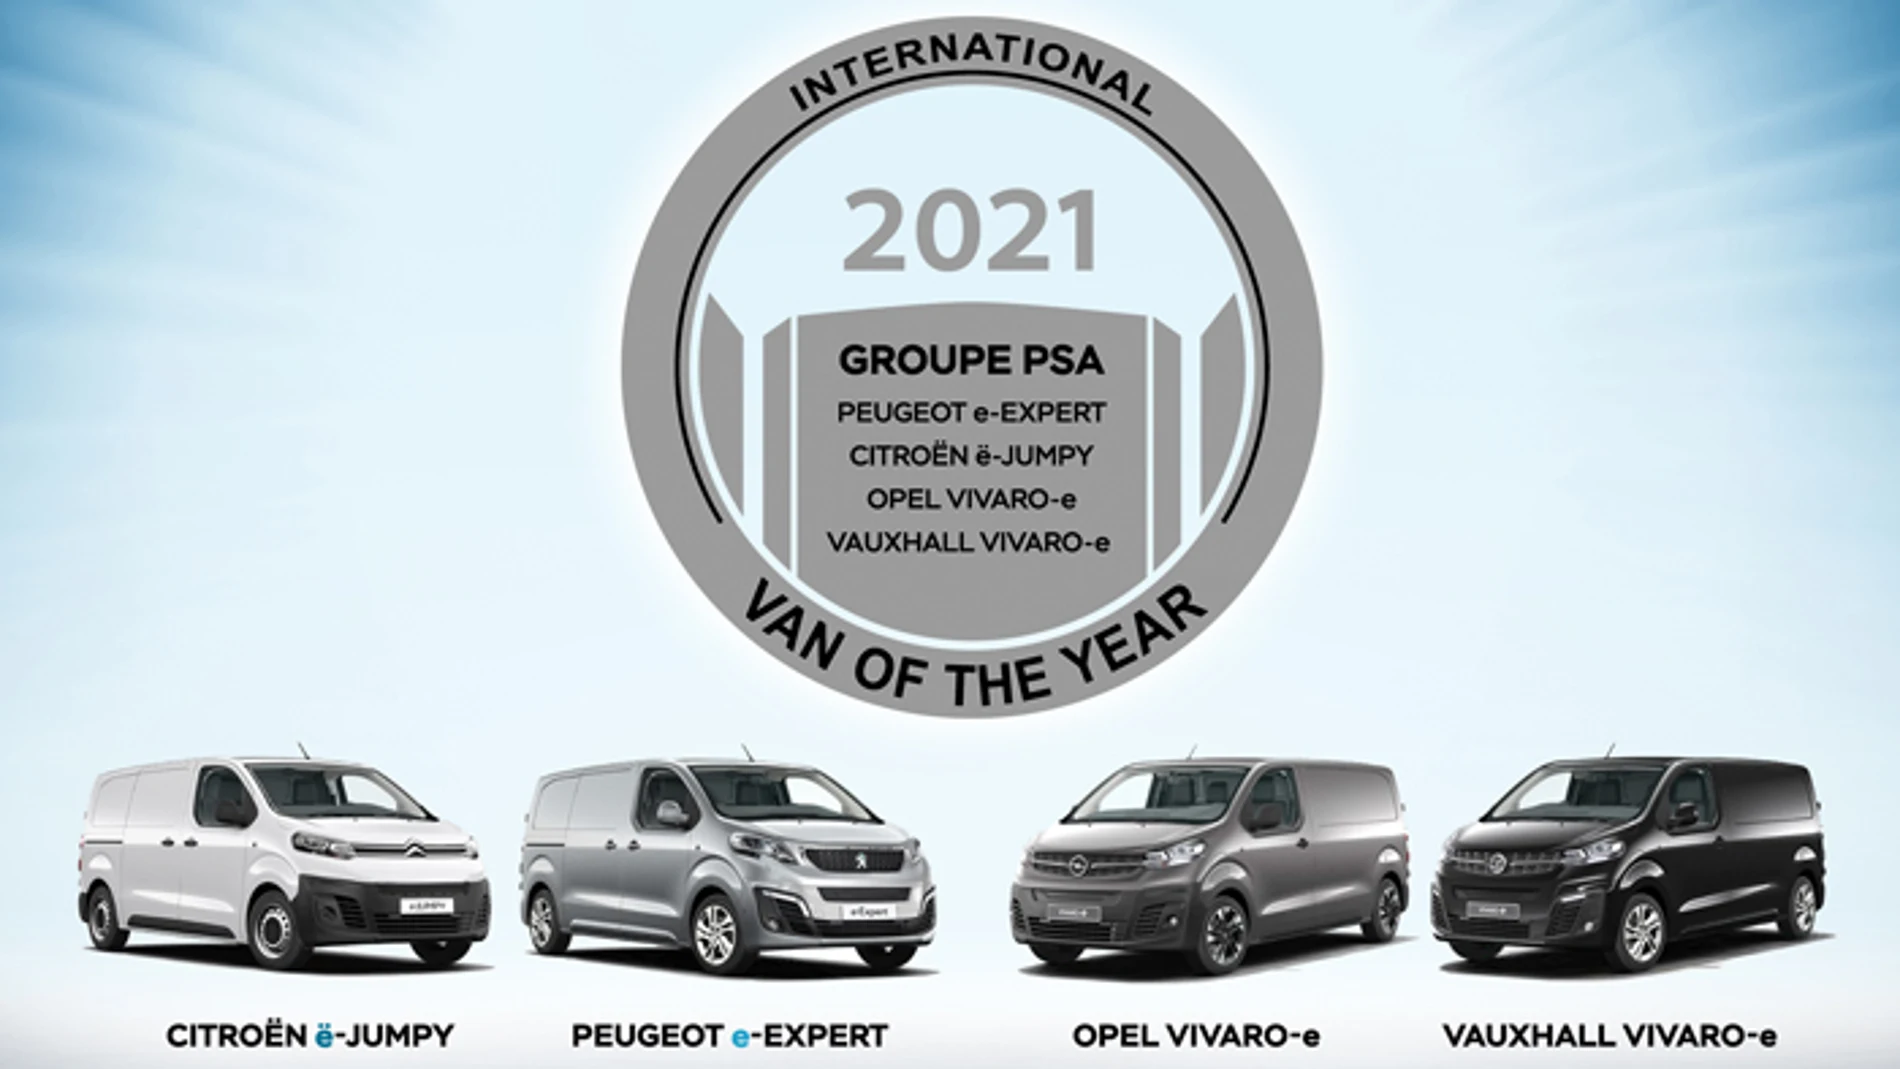 Van Of The Year 2021 para el Grupo PSA.